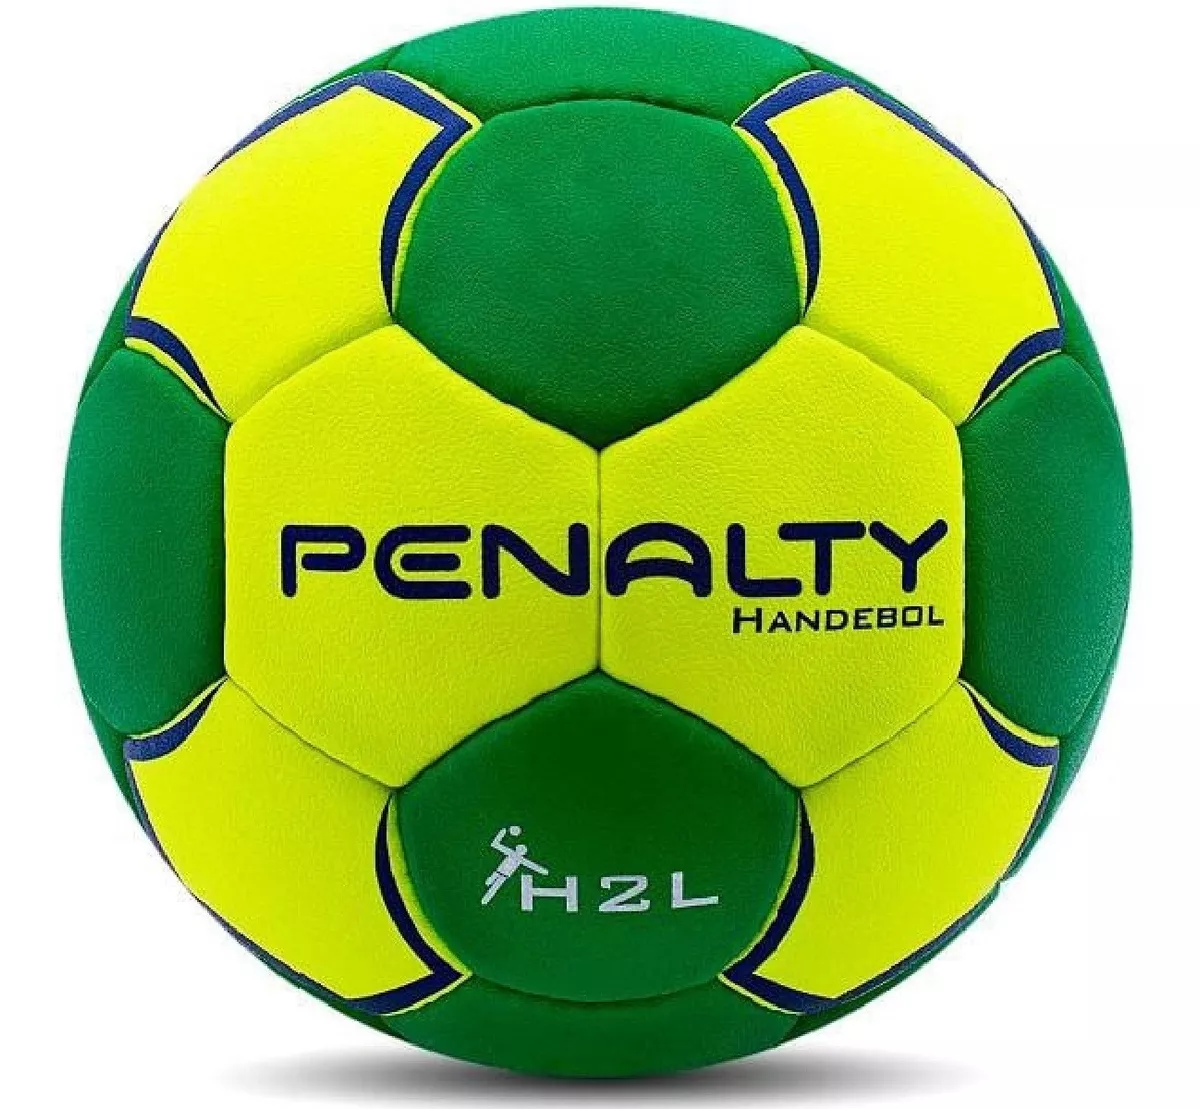 Bola De Handebol Penalty H2l Suecia Pró X Costurada Original